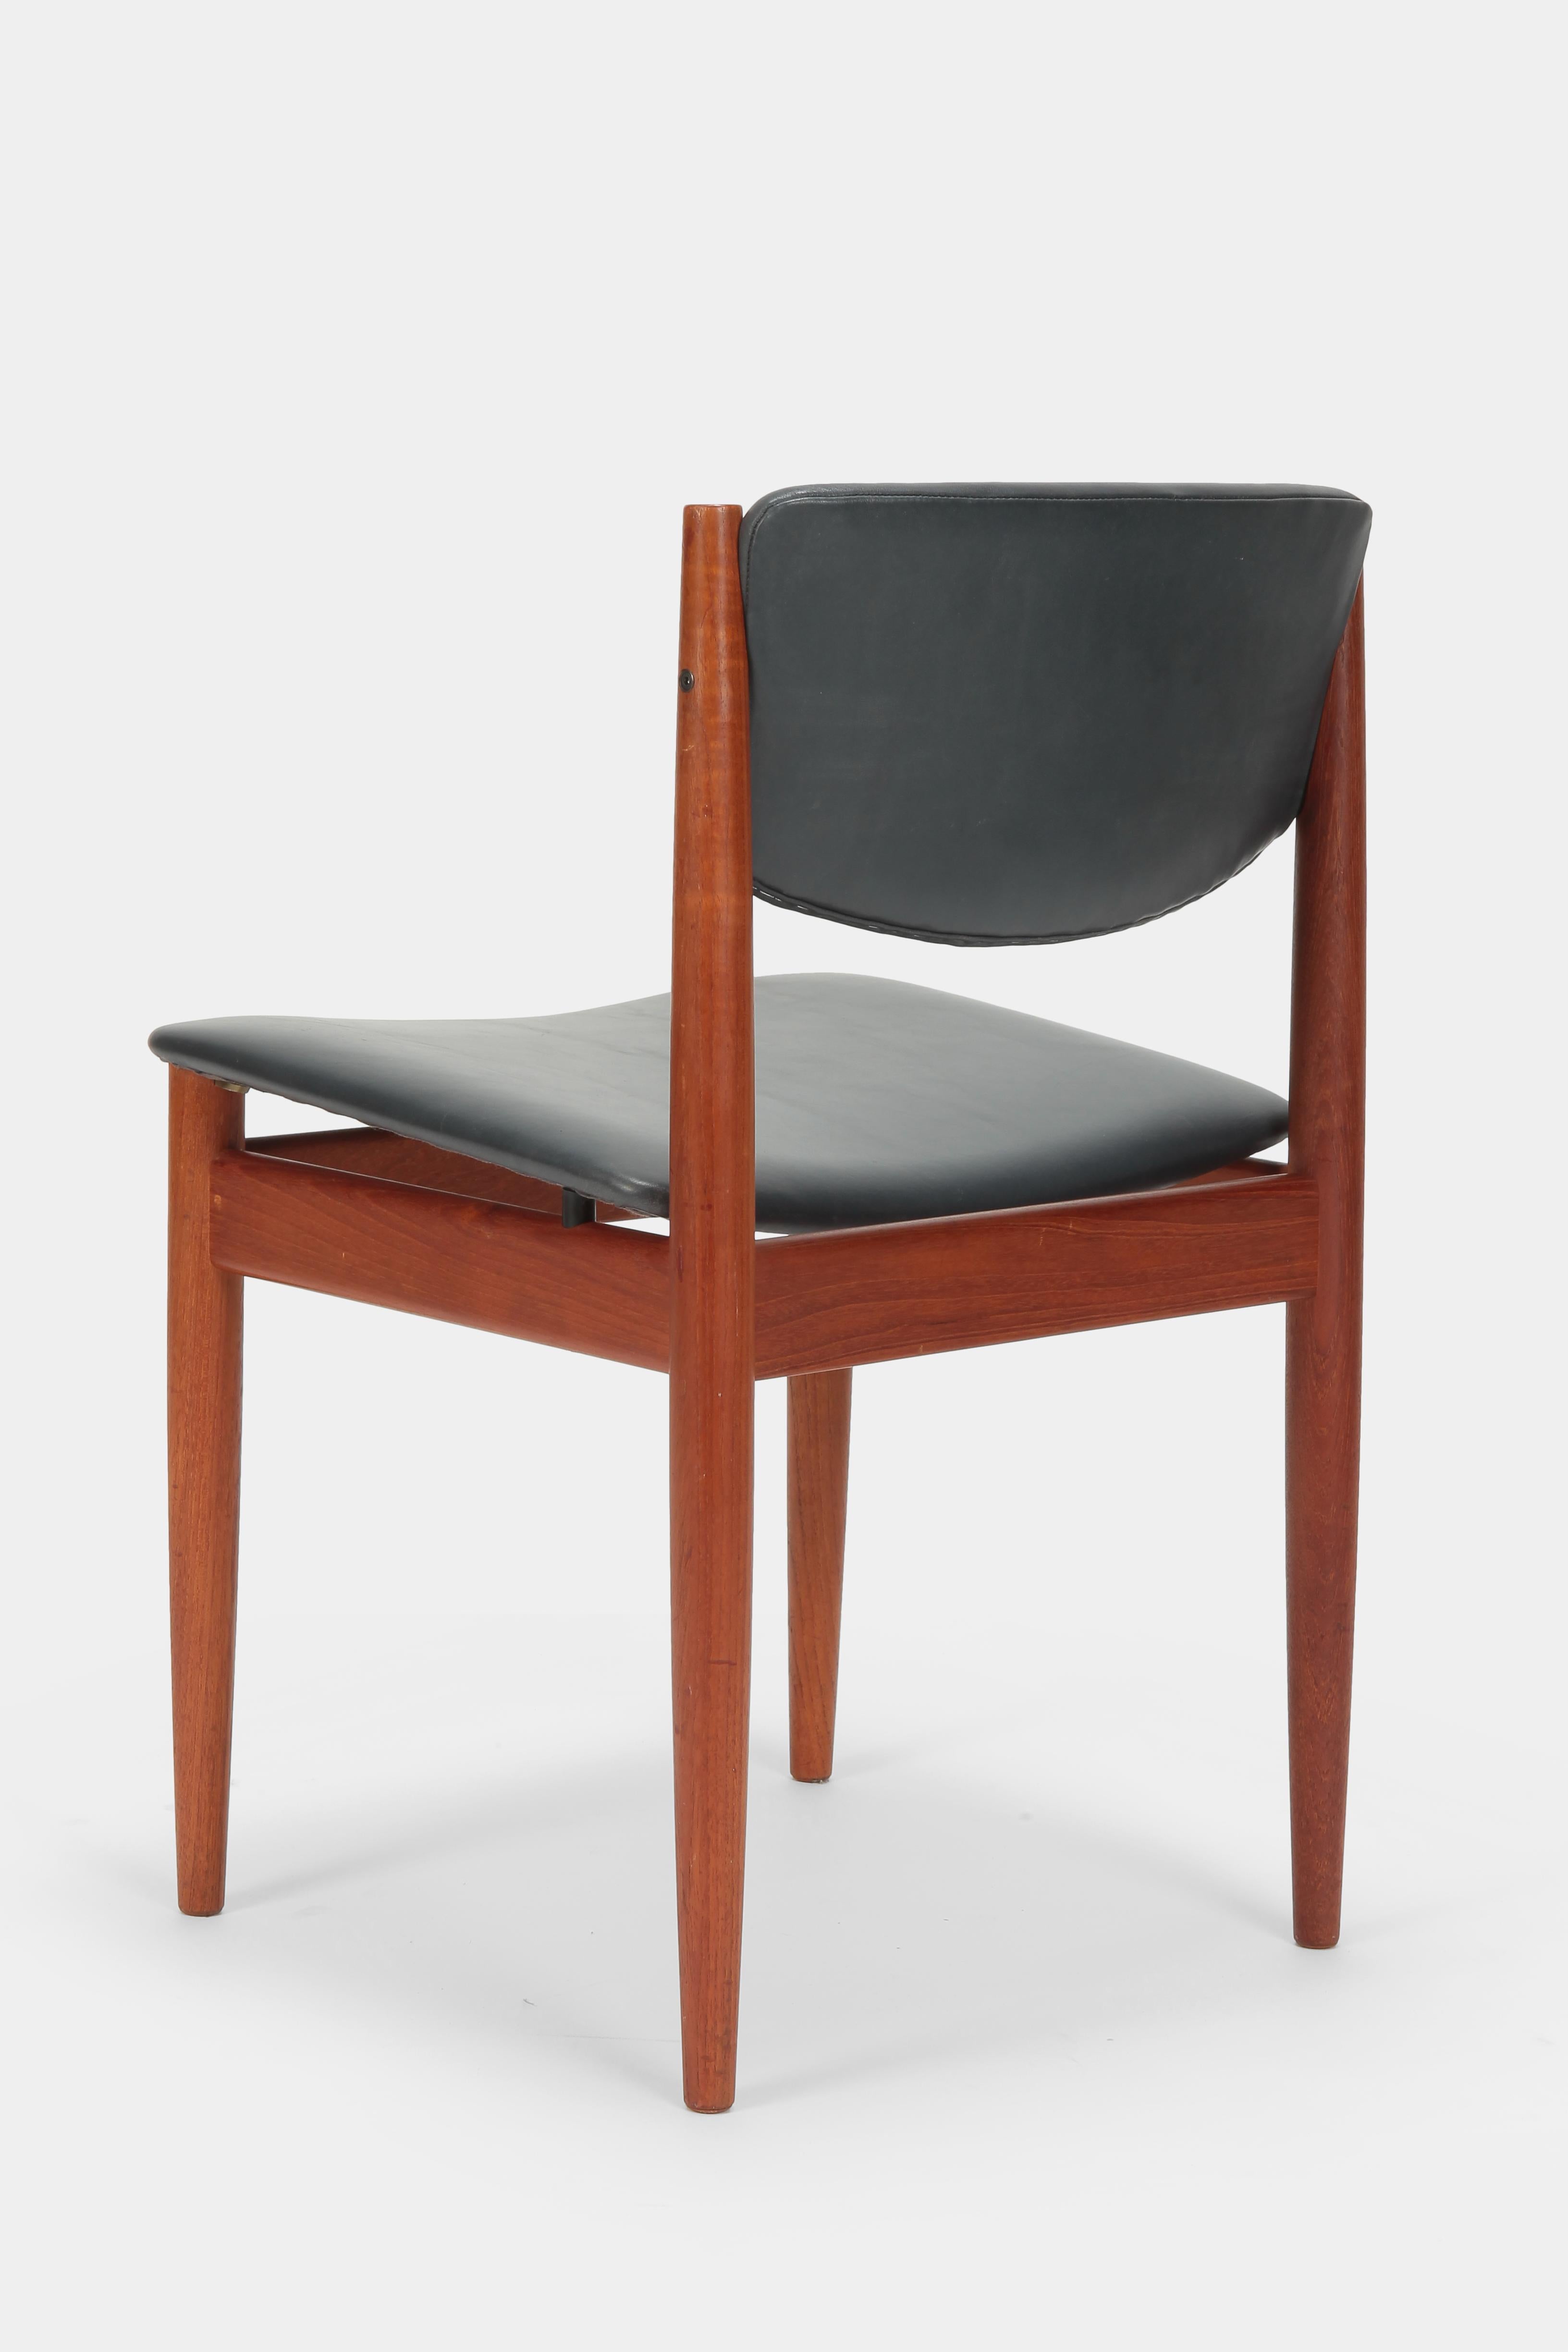 Pair Finn Juhl Model 197 Chairs Leather Teak, 1960s For Sale 3